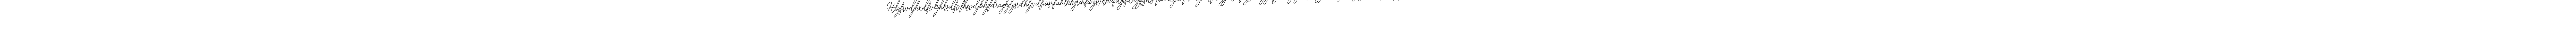 Make a beautiful signature design for name Hbjfrvdjhxdfvbjhksdfvfhsvdjbhjfdrzghjlgsrdhljvdfiusrfzhlhhgrehfiugsvkhufdgifdaygffds*fuoadghufdadghusfdagguisaefuyfdasgighfgadsogugdafsouggafdsugfdasghgifudasgofarejhjvsfdghfgfdfgvauddhghkucdfagghvfdaghuidfaiyuvdsfgiyufdgfyyfdvryysetryrrsyyyruyryrygy(. Use this online signature maker to create a handwritten signature for free. Hbjfrvdjhxdfvbjhksdfvfhsvdjbhjfdrzghjlgsrdhljvdfiusrfzhlhhgrehfiugsvkhufdgifdaygffds*fuoadghufdadghusfdagguisaefuyfdasgighfgadsogugdafsouggafdsugfdasghgifudasgofarejhjvsfdghfgfdfgvauddhghkucdfagghvfdaghuidfaiyuvdsfgiyufdgfyyfdvryysetryrrsyyyruyryrygy( signature style 12 images and pictures png